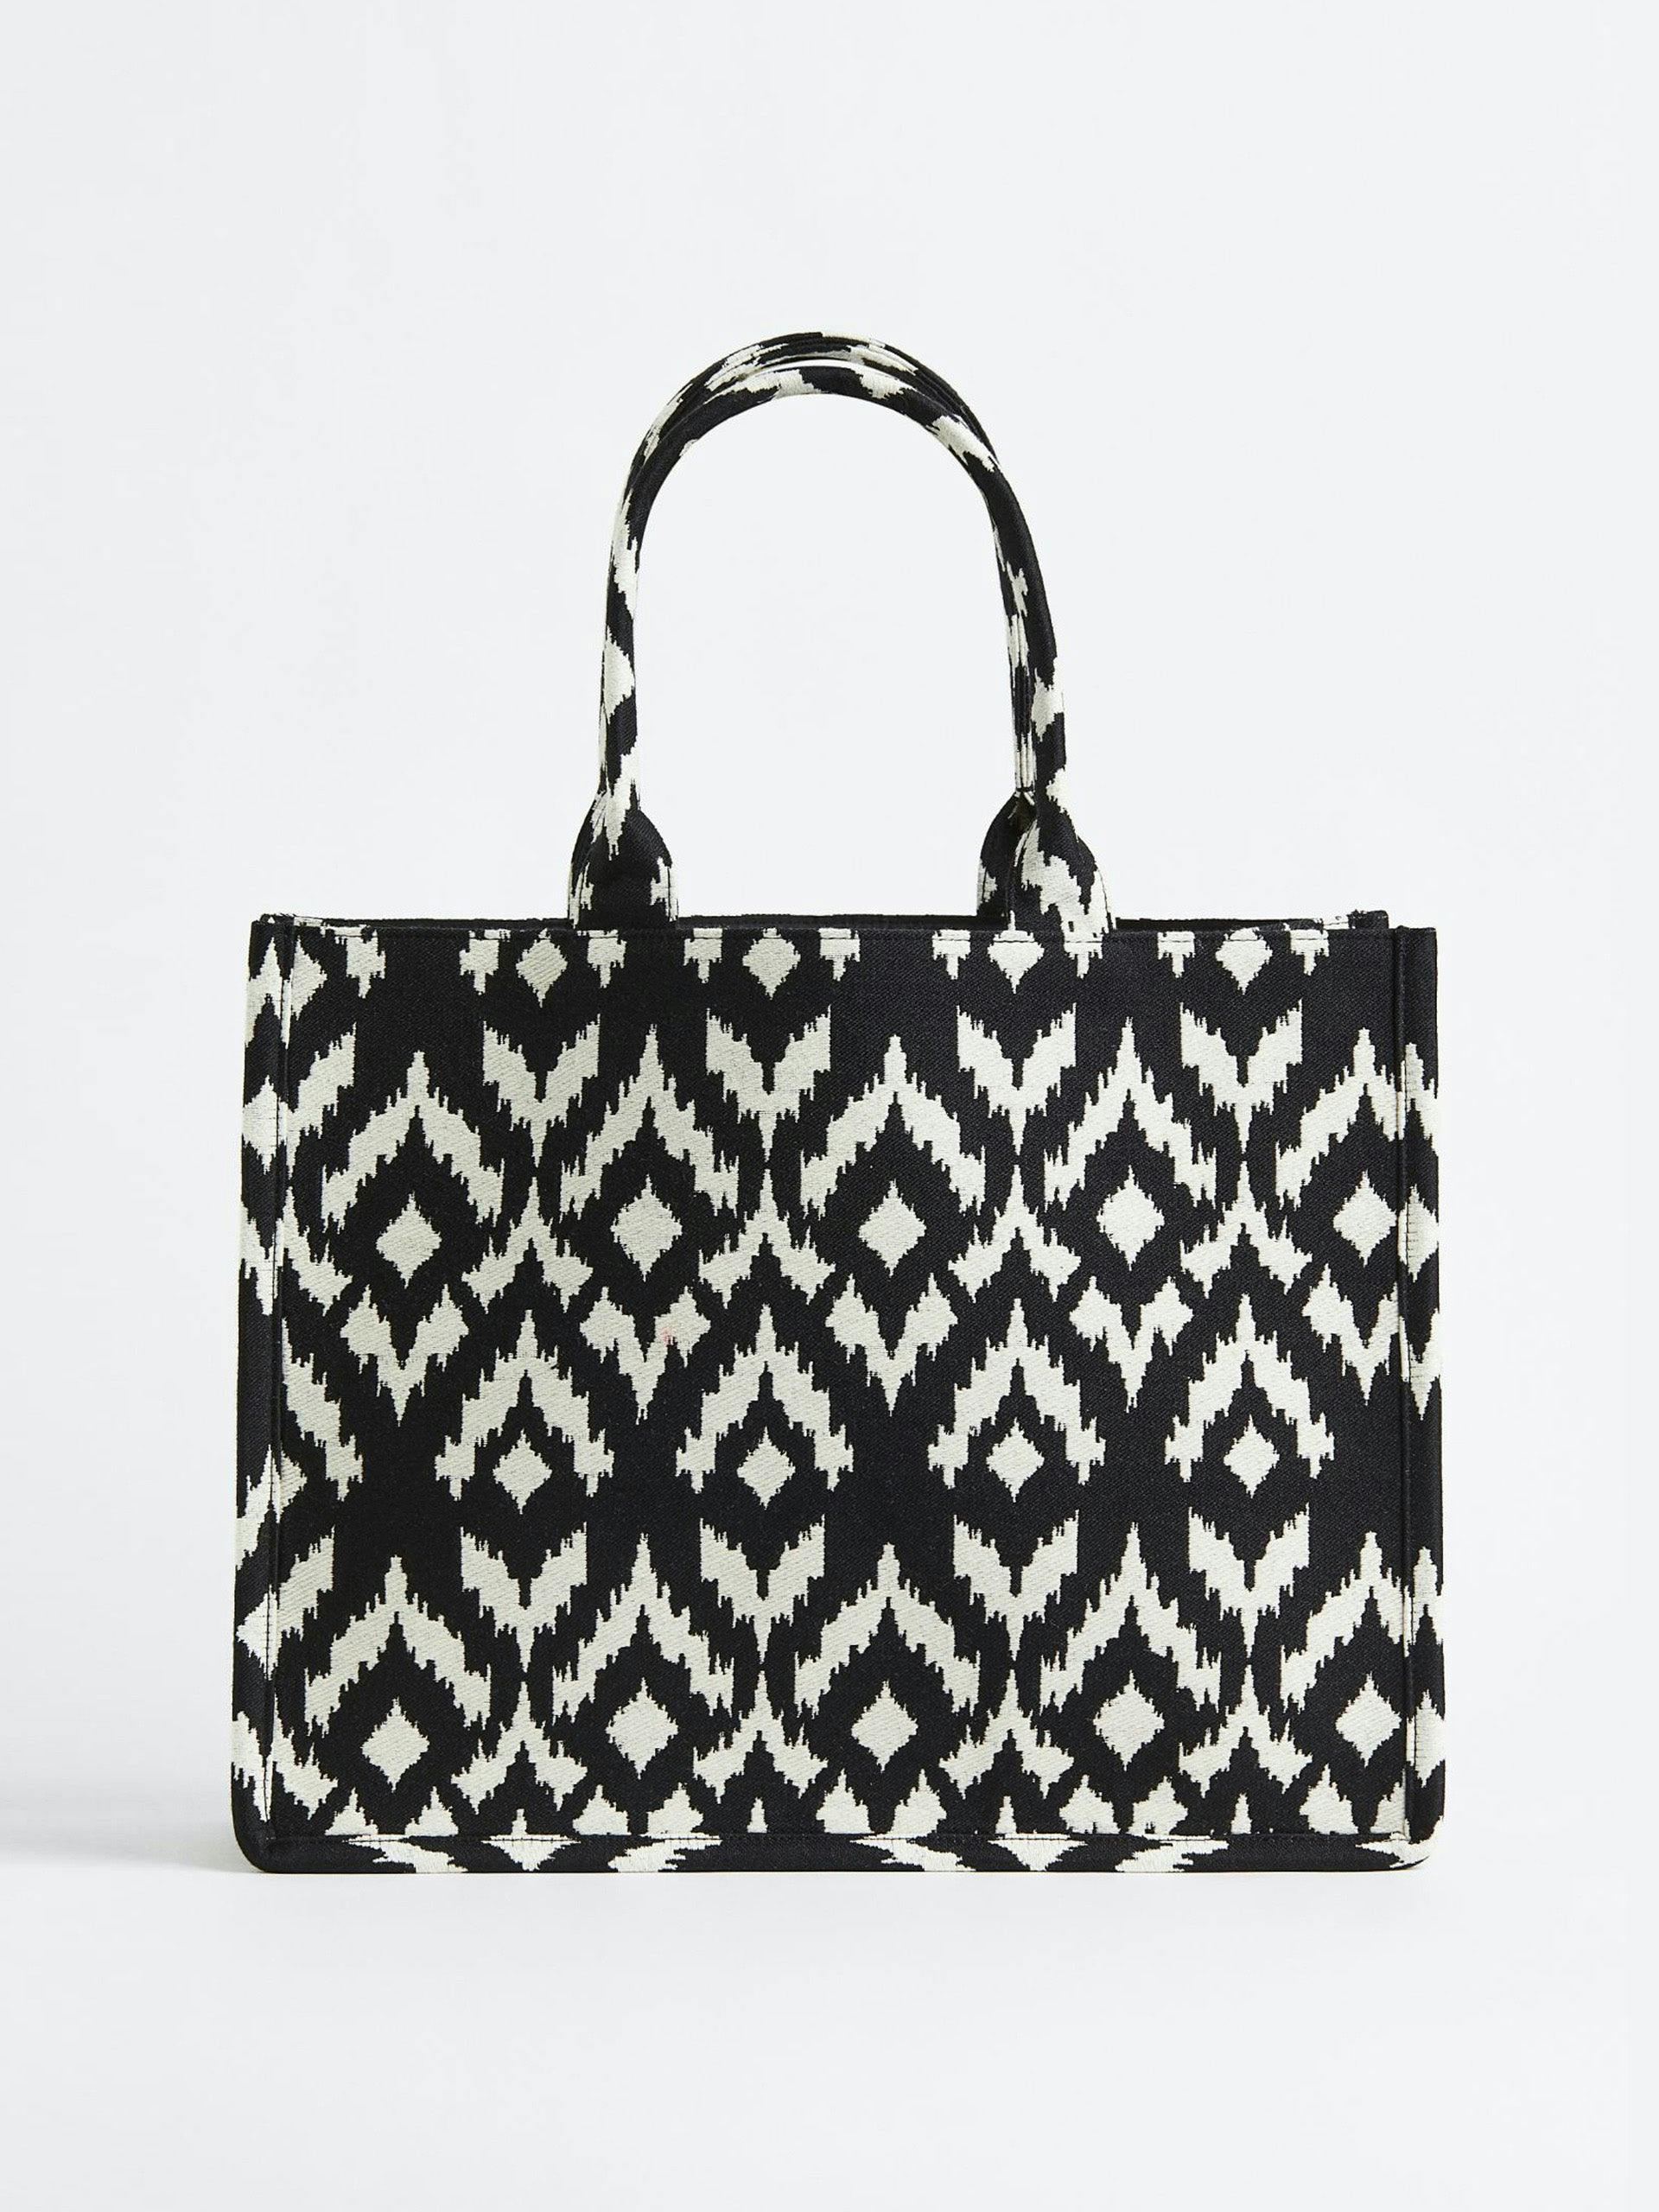 Black and white jacquard-weave bag